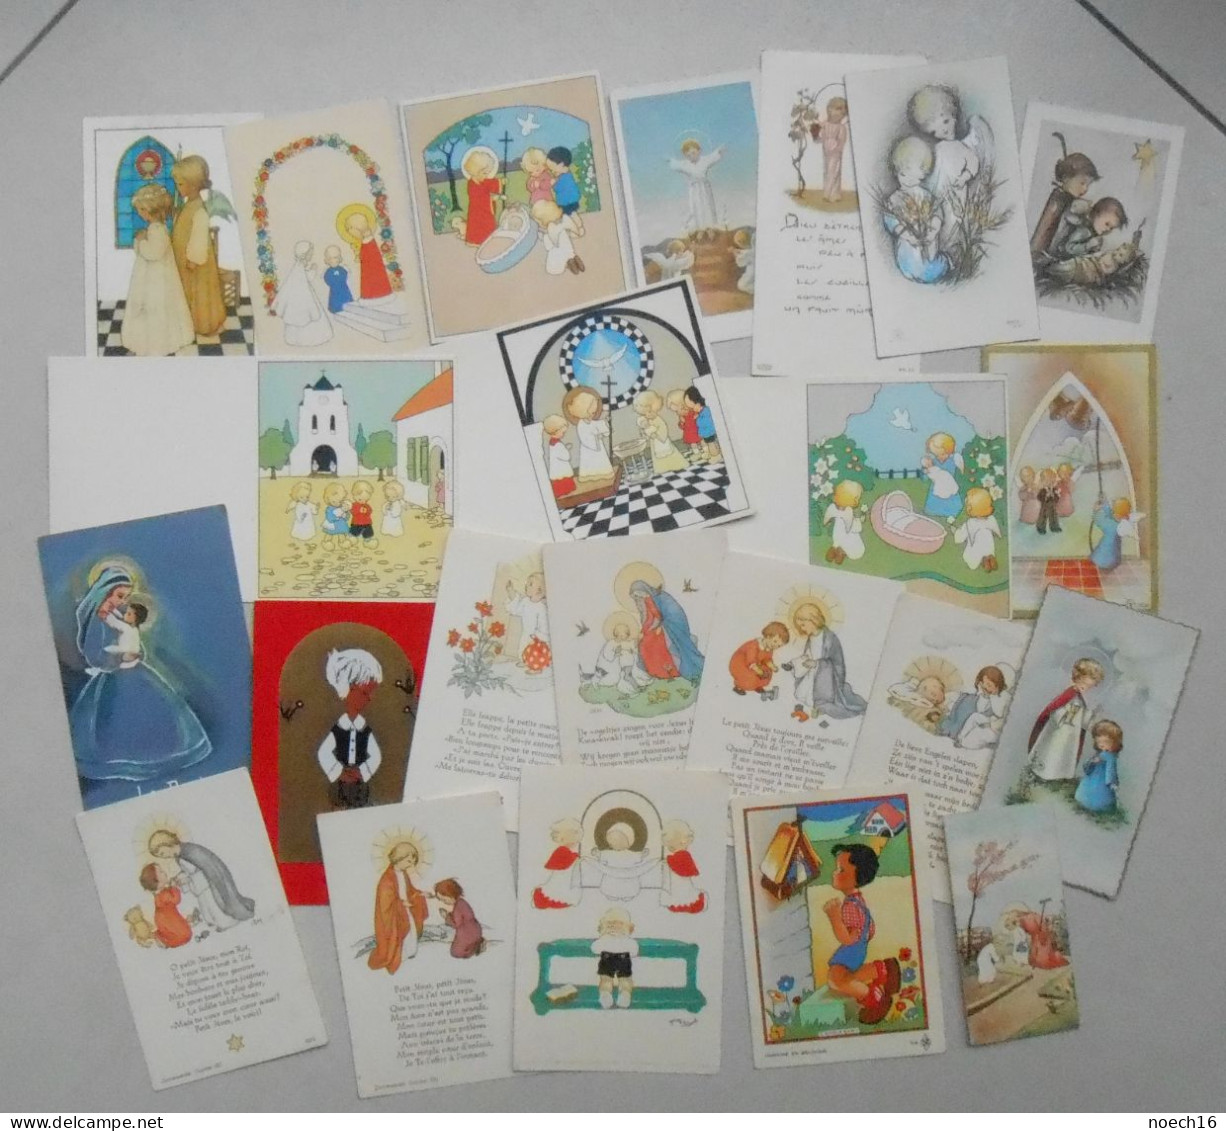 Lot 160 Images religieuses enfantines. Holy cards. Illustrateurs Pennyless, Gouppy, Linen, Englebert, Boland, Fovel.....